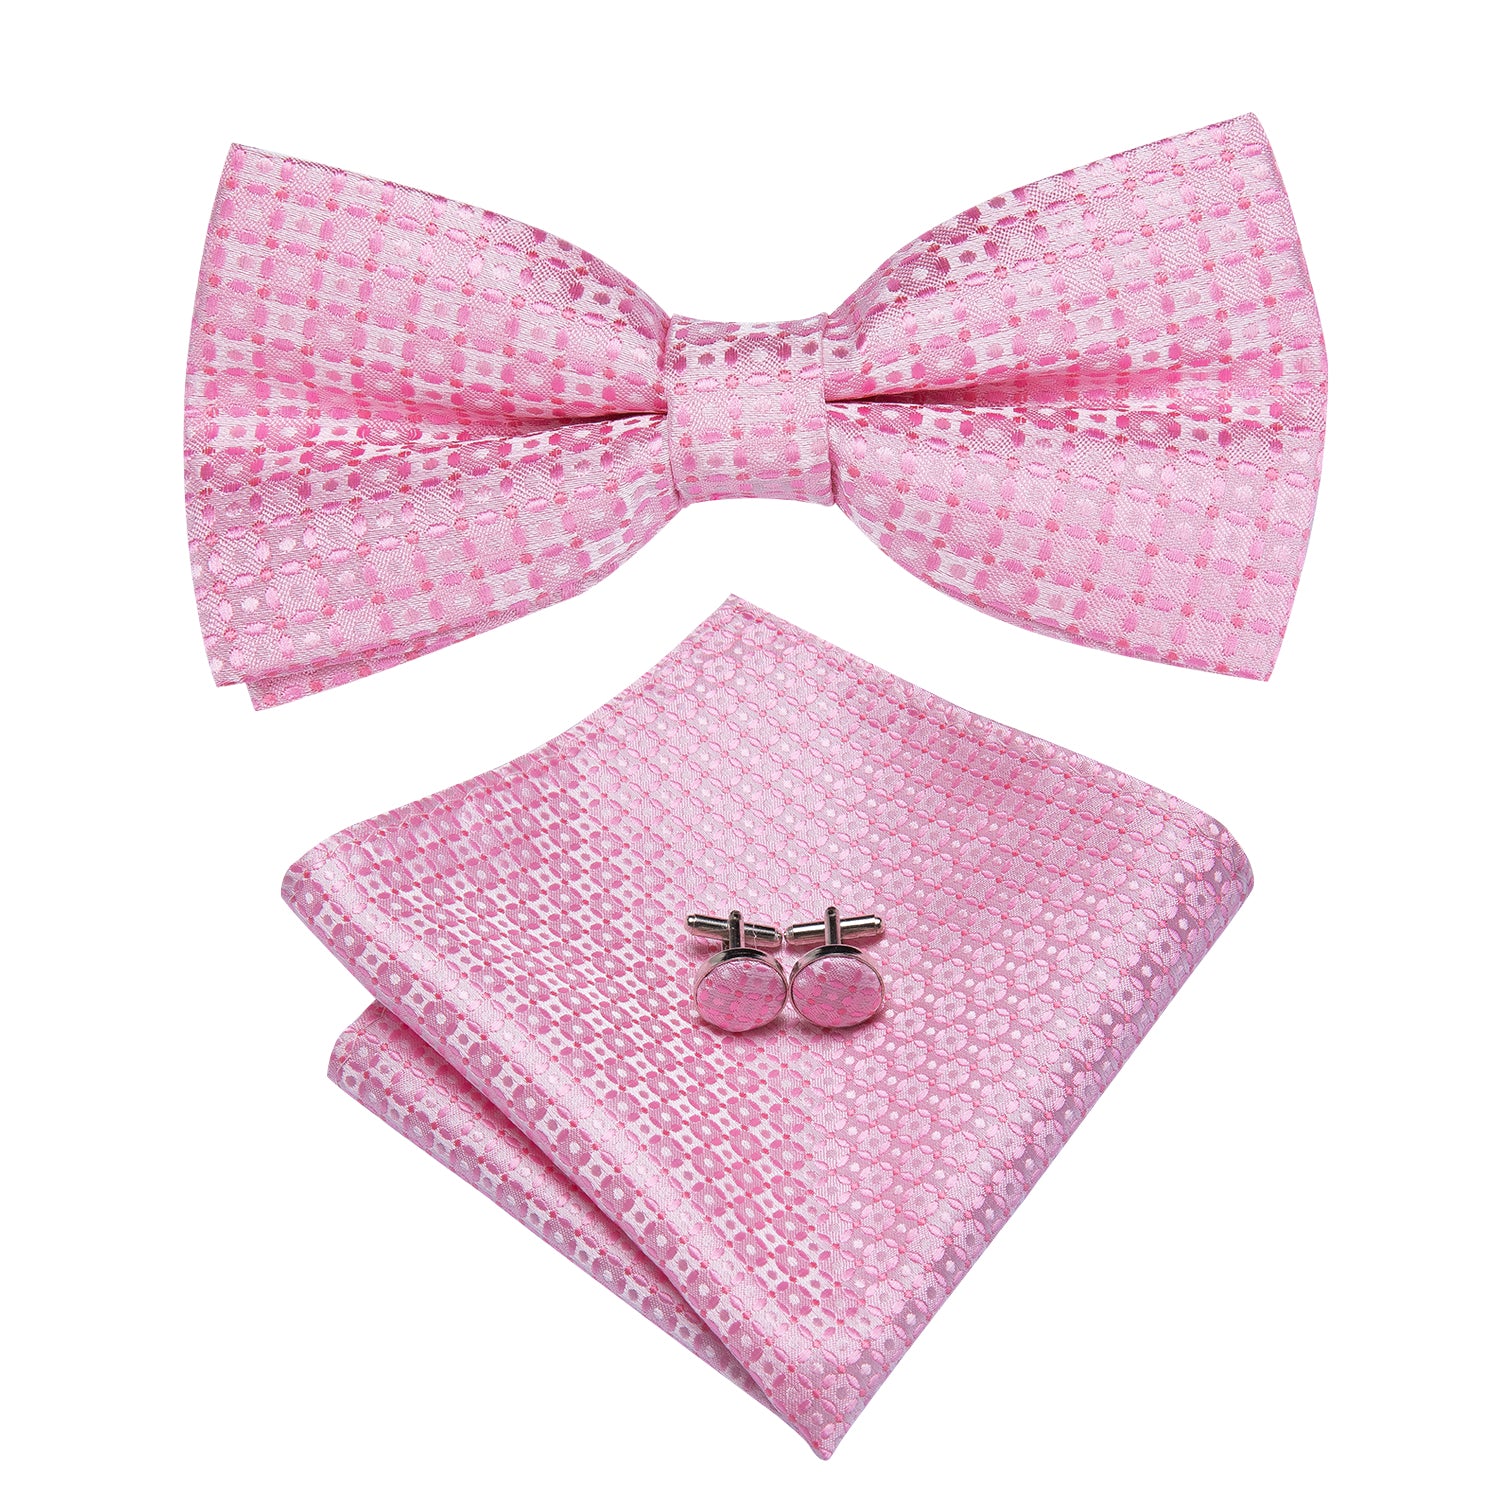 Pink Novelty Pre-tied Bow Tie Hanky Cufflinks Set